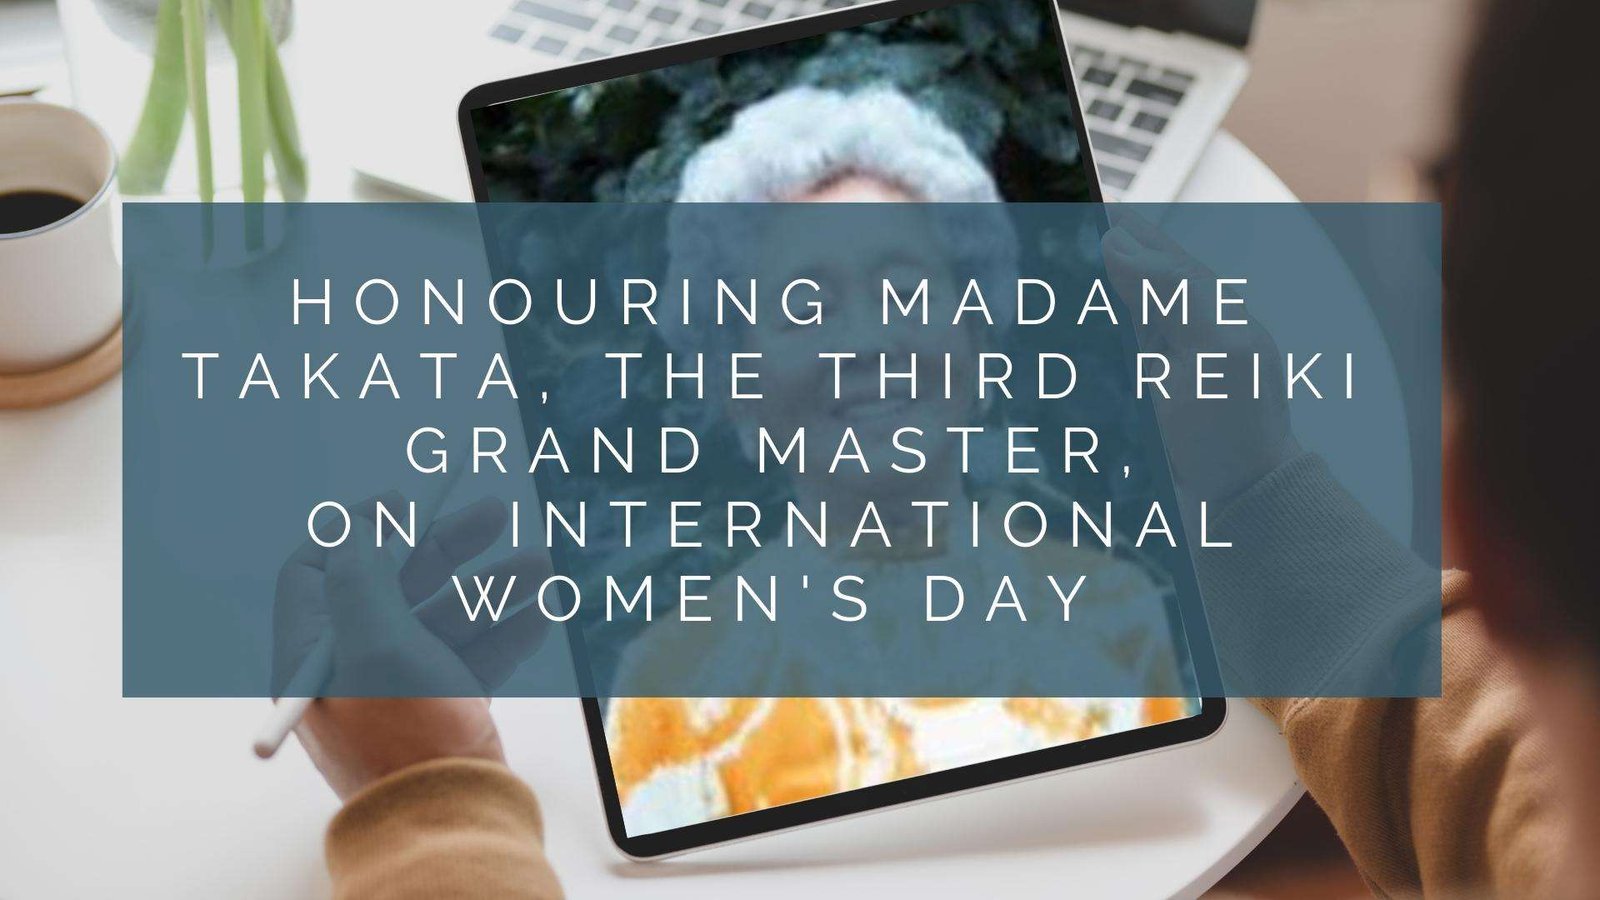 On International Women’s Day we Celebrate the life of Madame Takata Reiki Third Grand Master Teacher